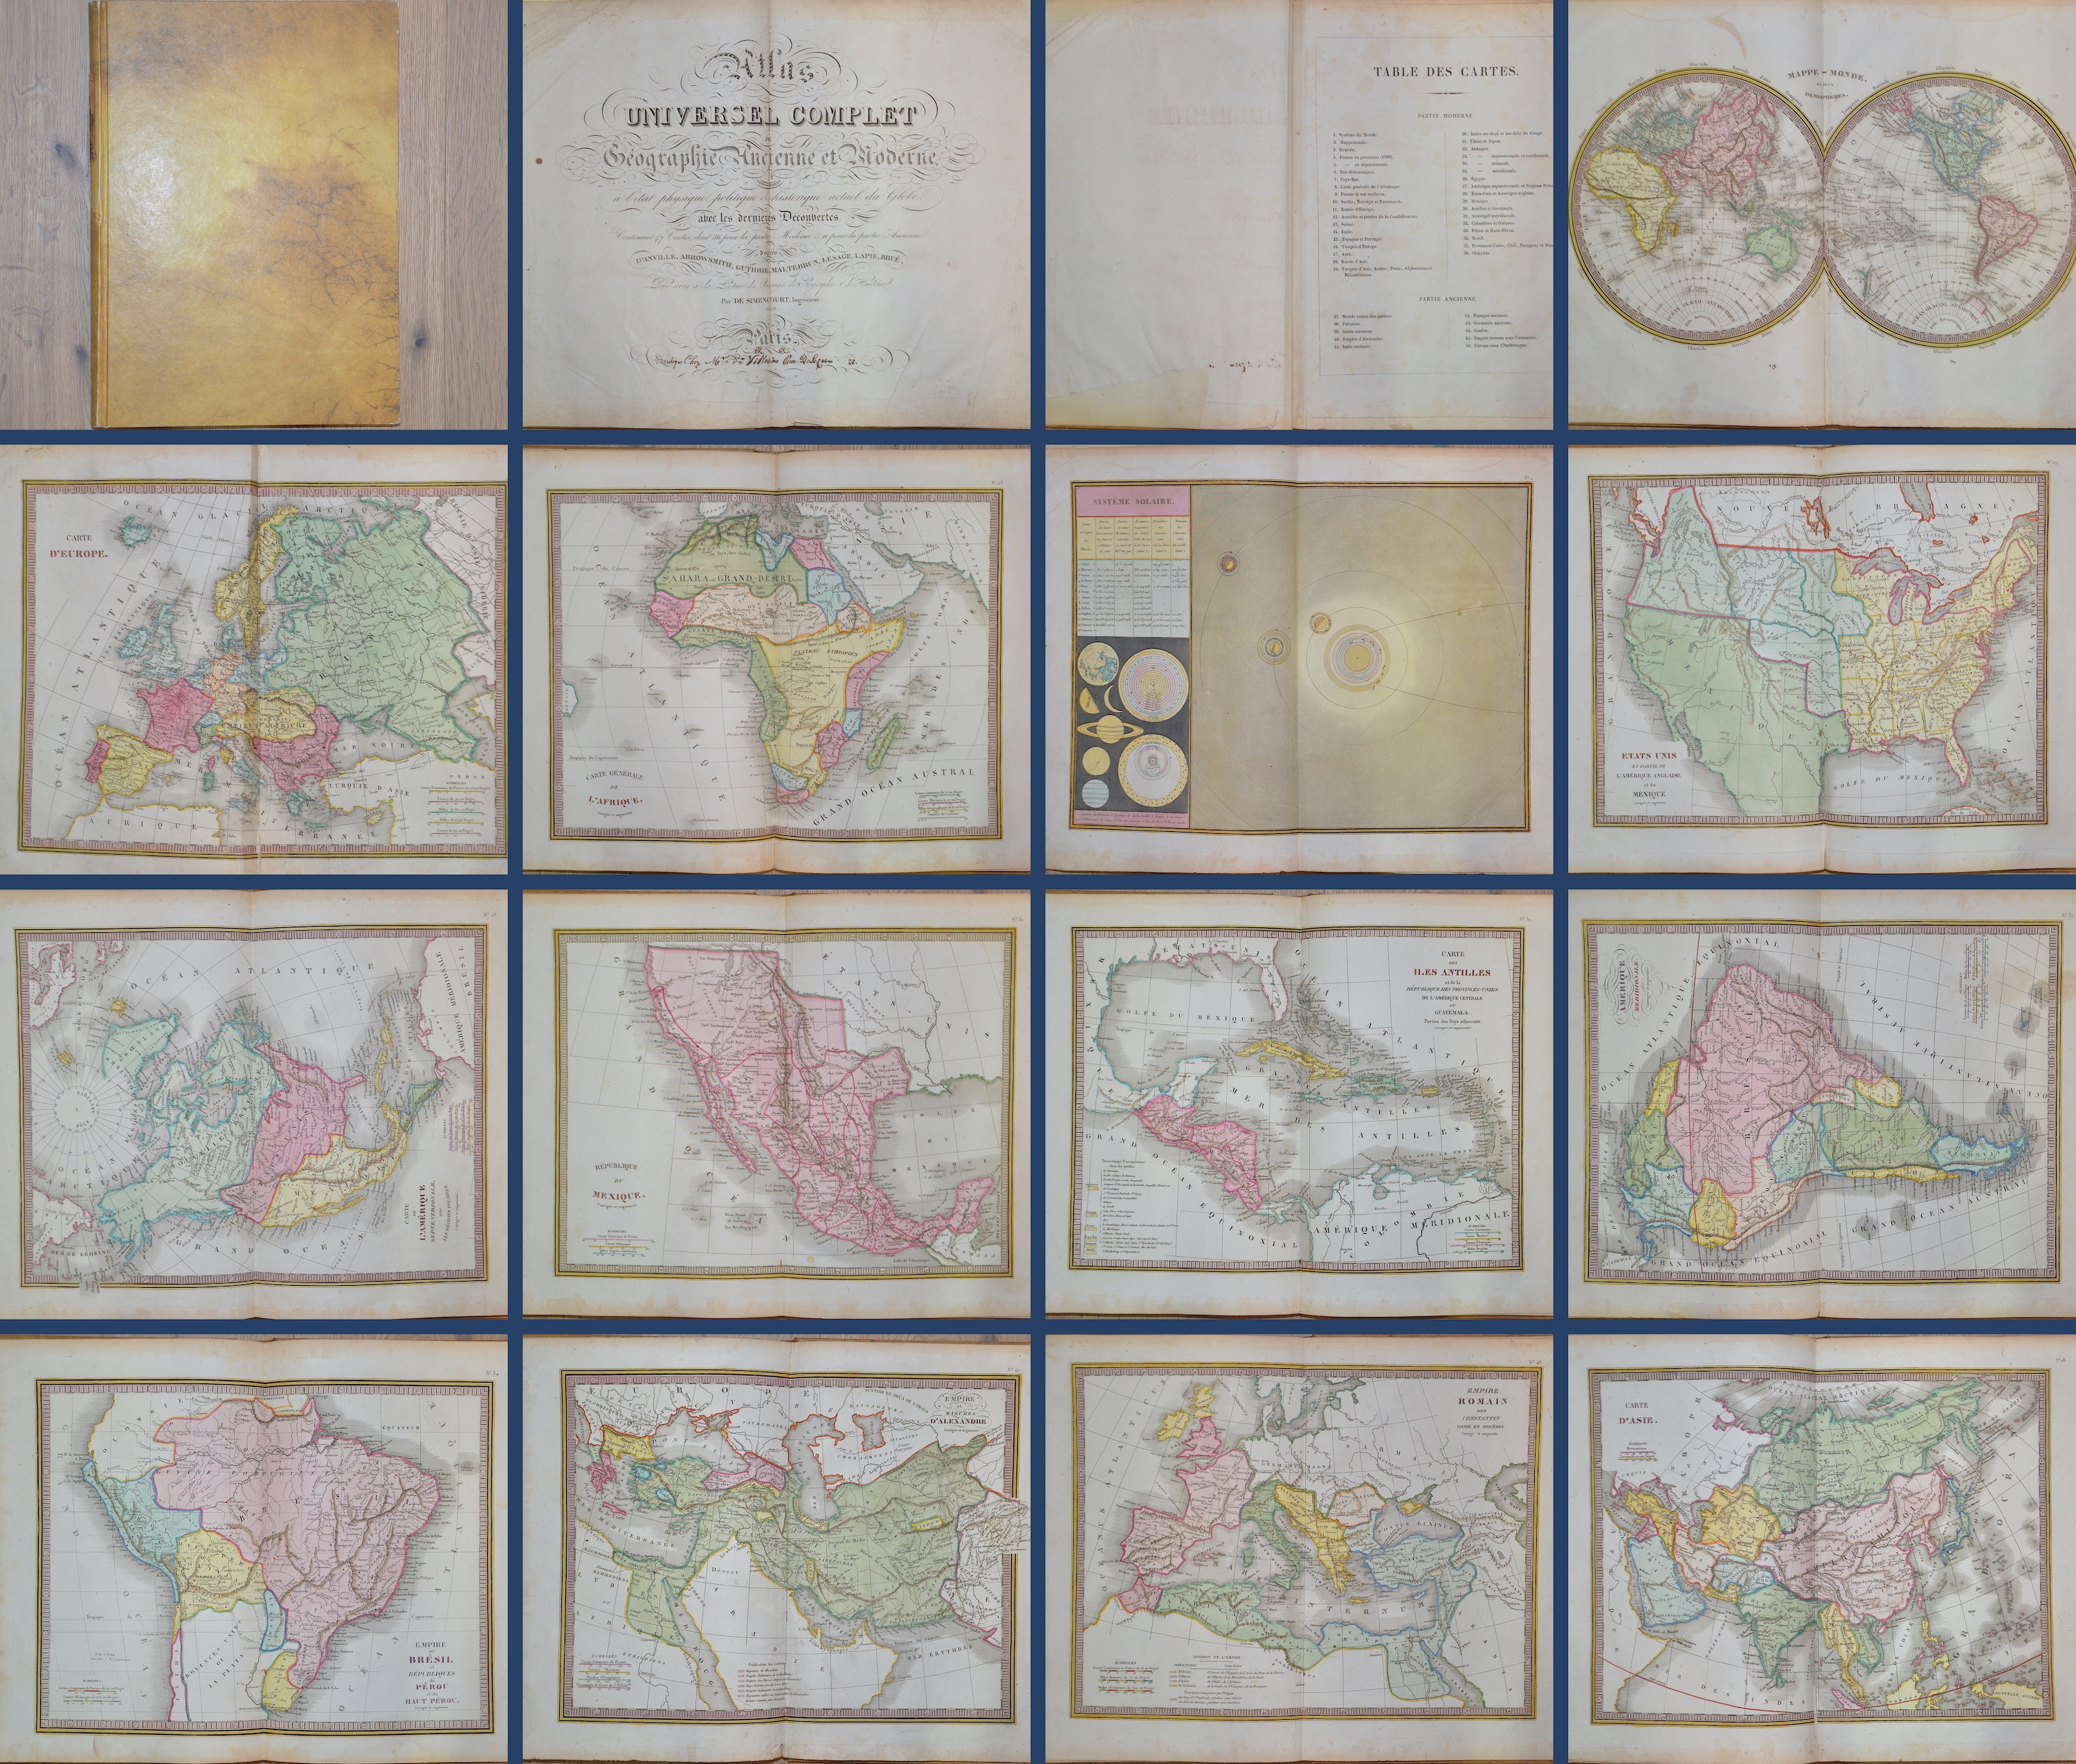 Arrowsmith John Atlas Universel Complet Geographie Ancienne et Moderne,